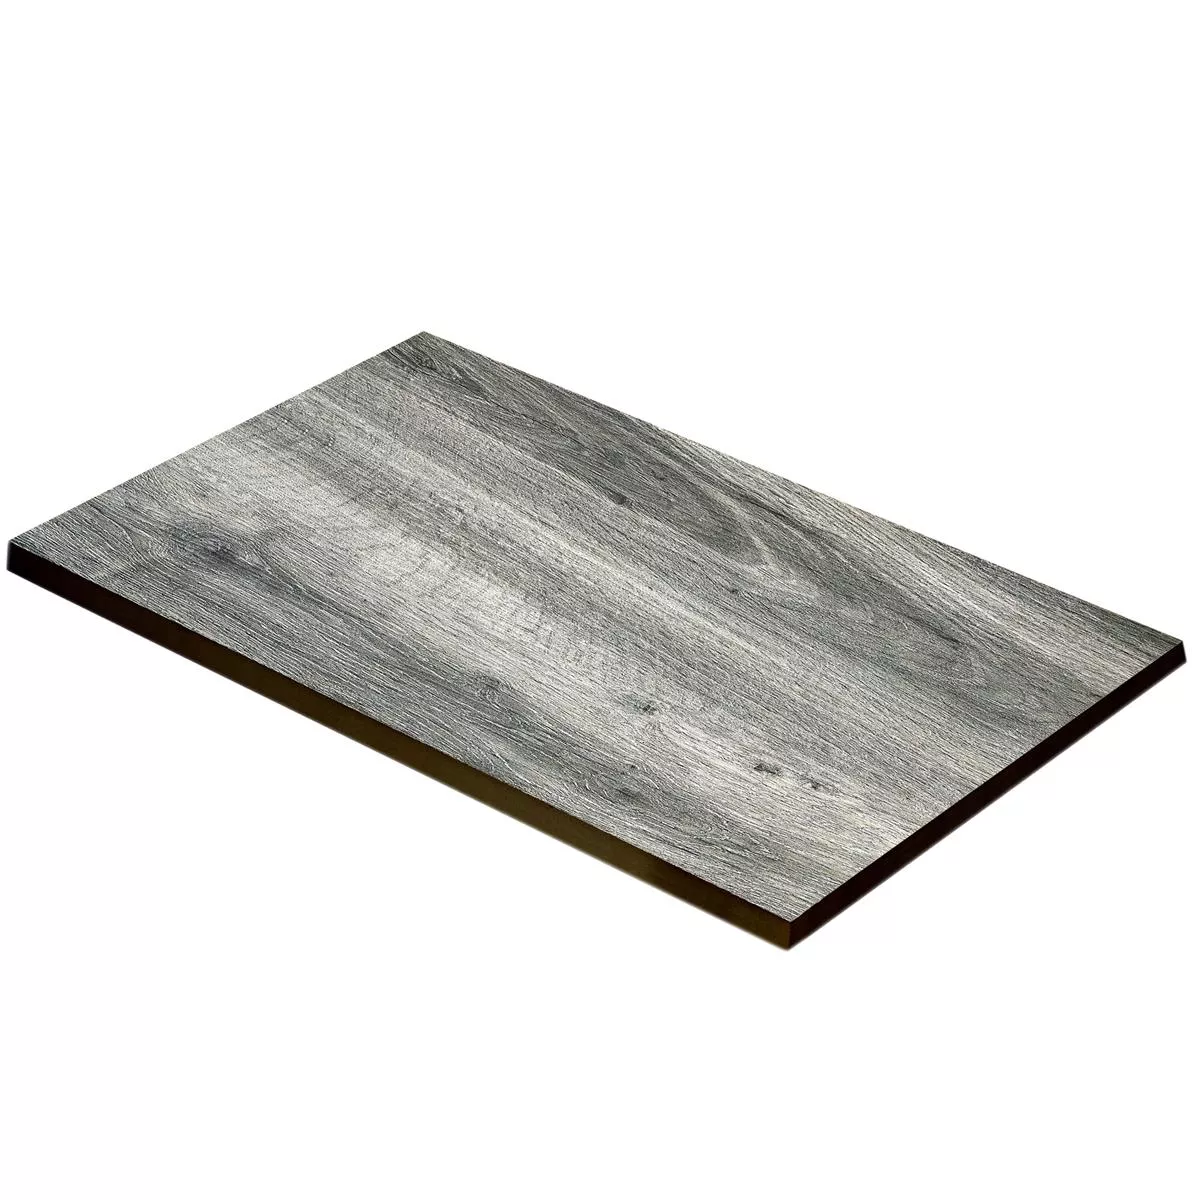 Sample Terrace Tiles Starwood Wood Optic Grey 45x90cm